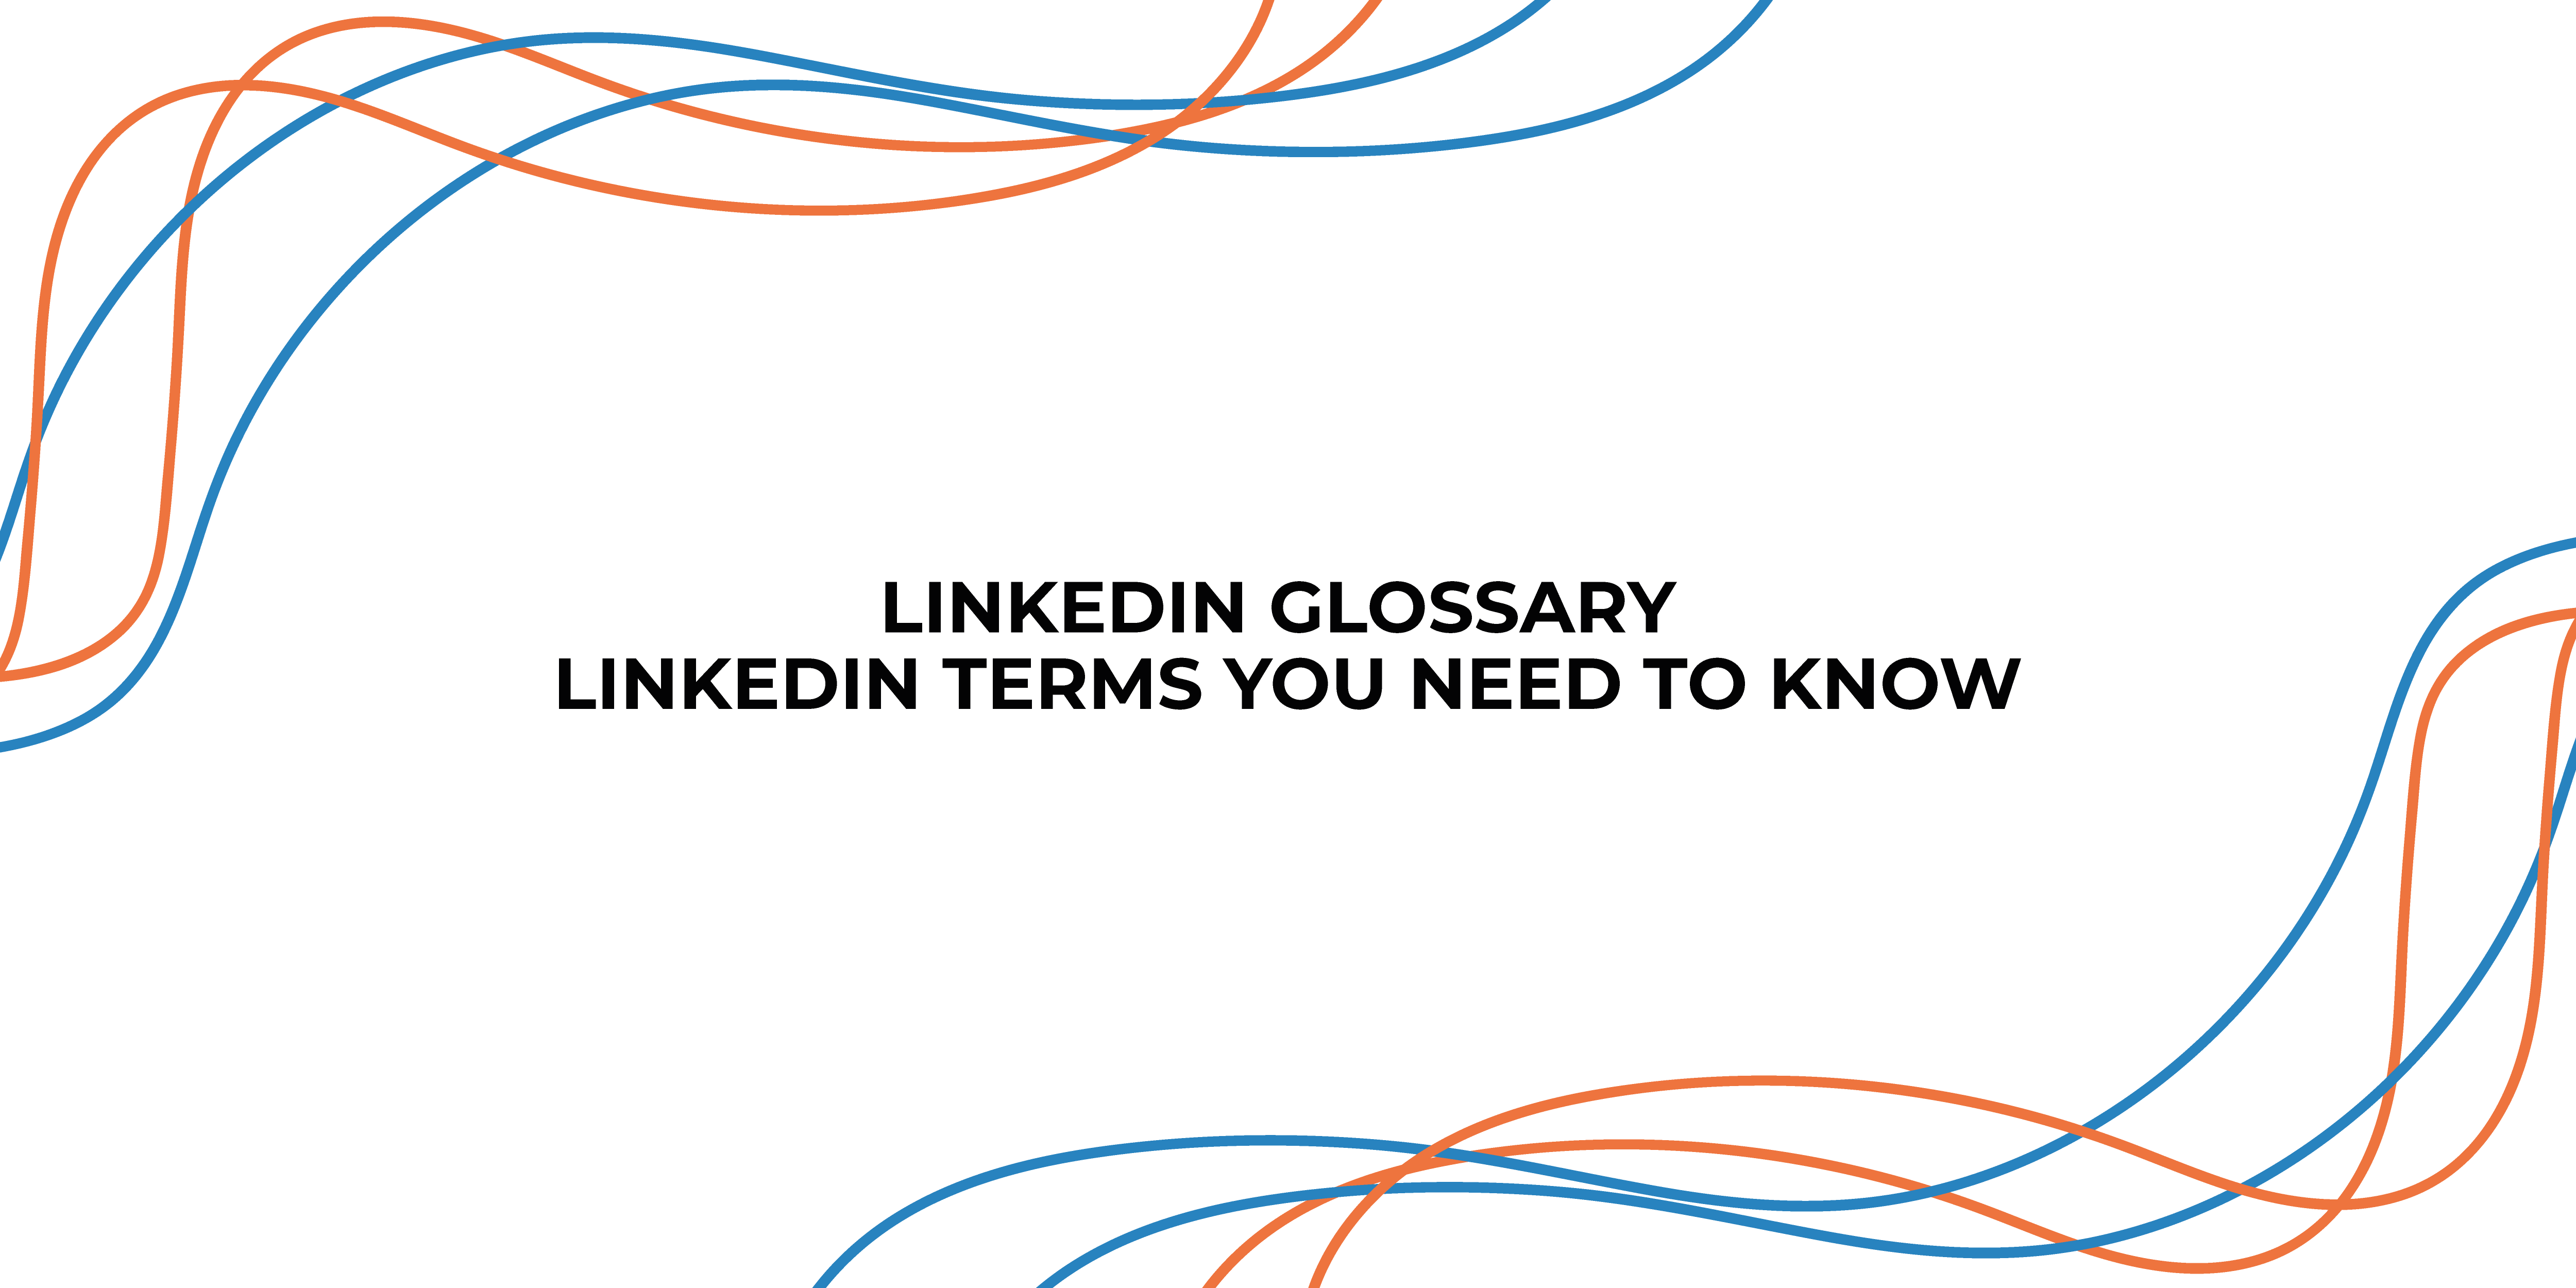 LinkedIn Glossary Graphic